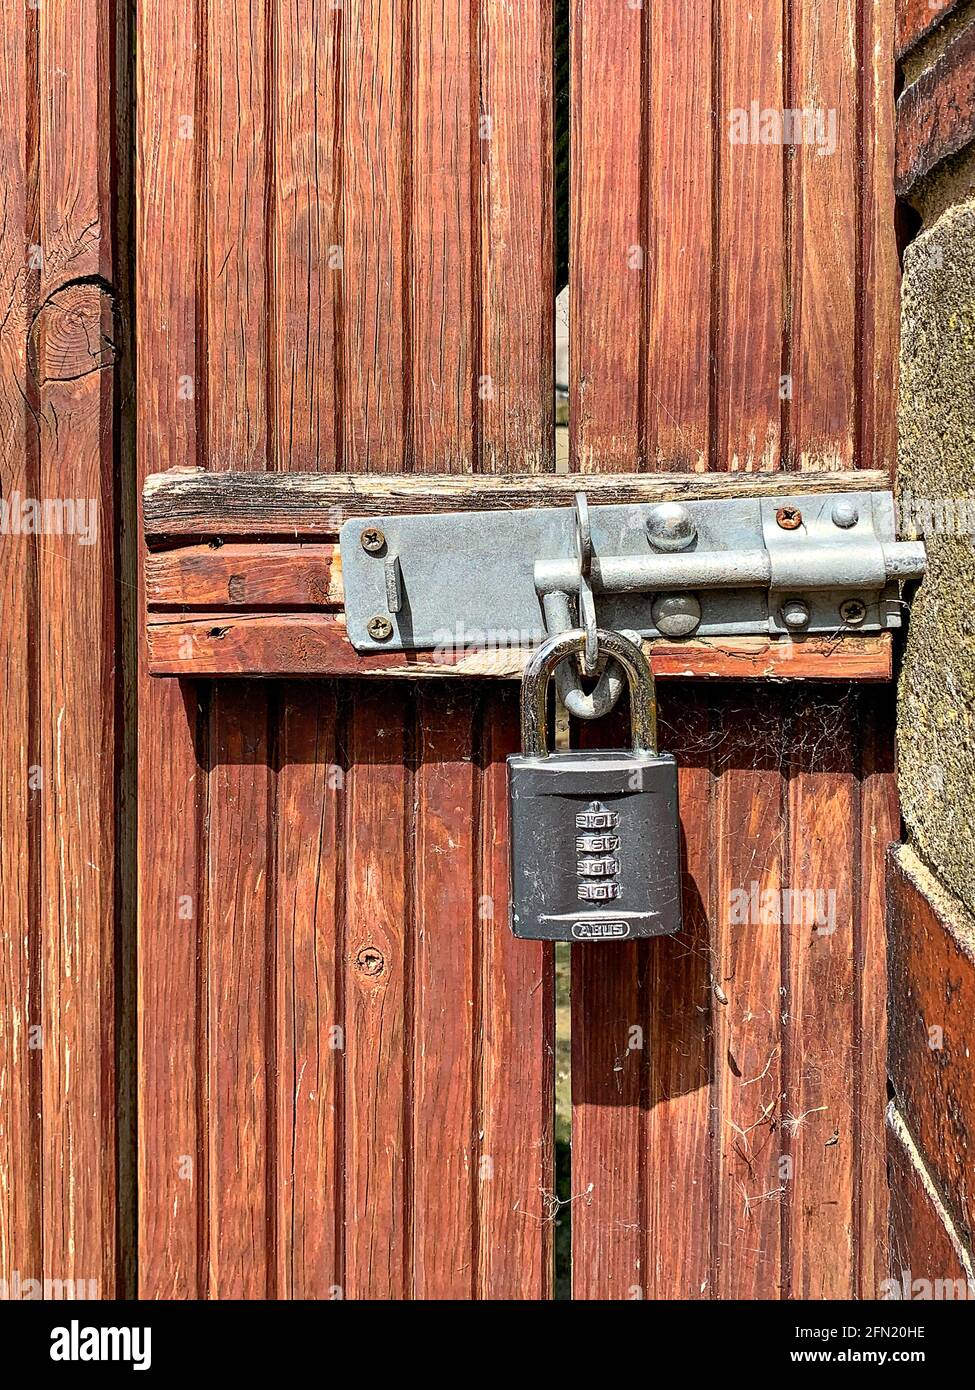 Padlock through bolt on wooden exterior street gate Stock Photo - Alamy